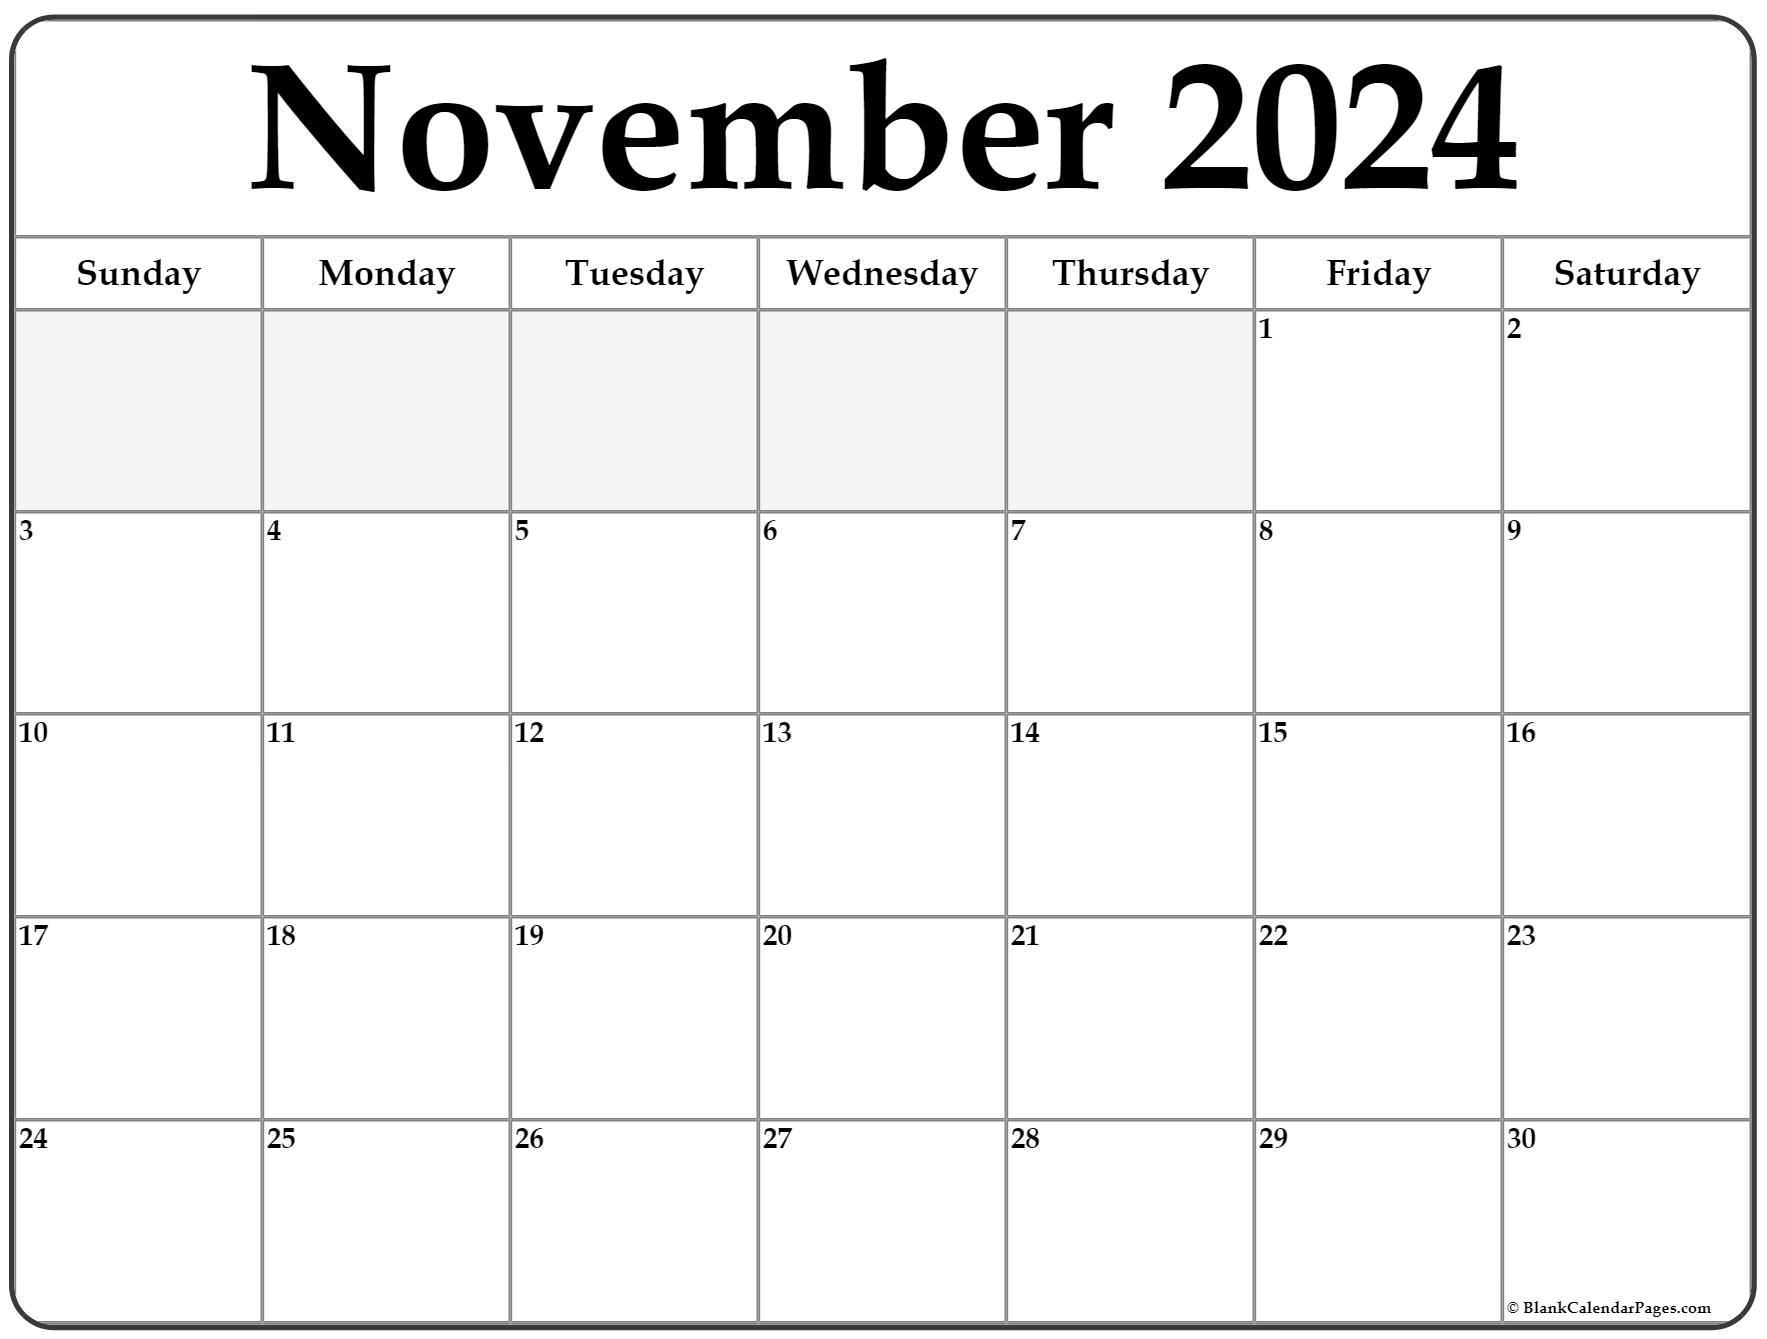 Free Printable November Calendar 2022 November 2022 Calendar | Free Printable Calendar Templates